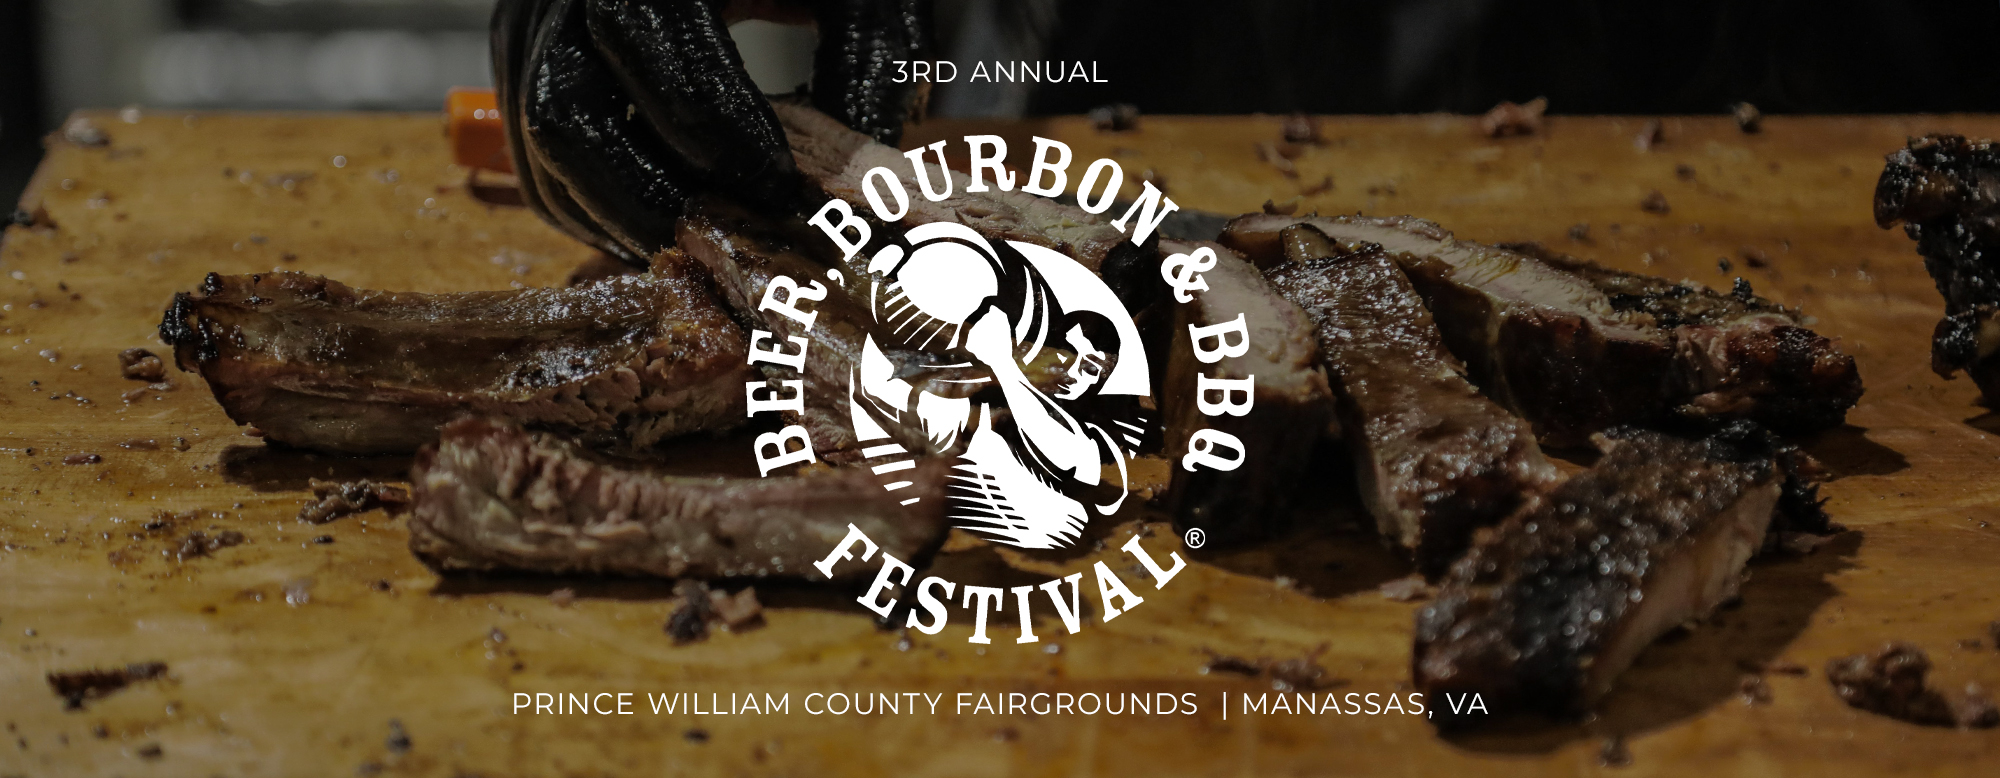 Beer, Bourbon & Barbecue Festival - NOVA banner image